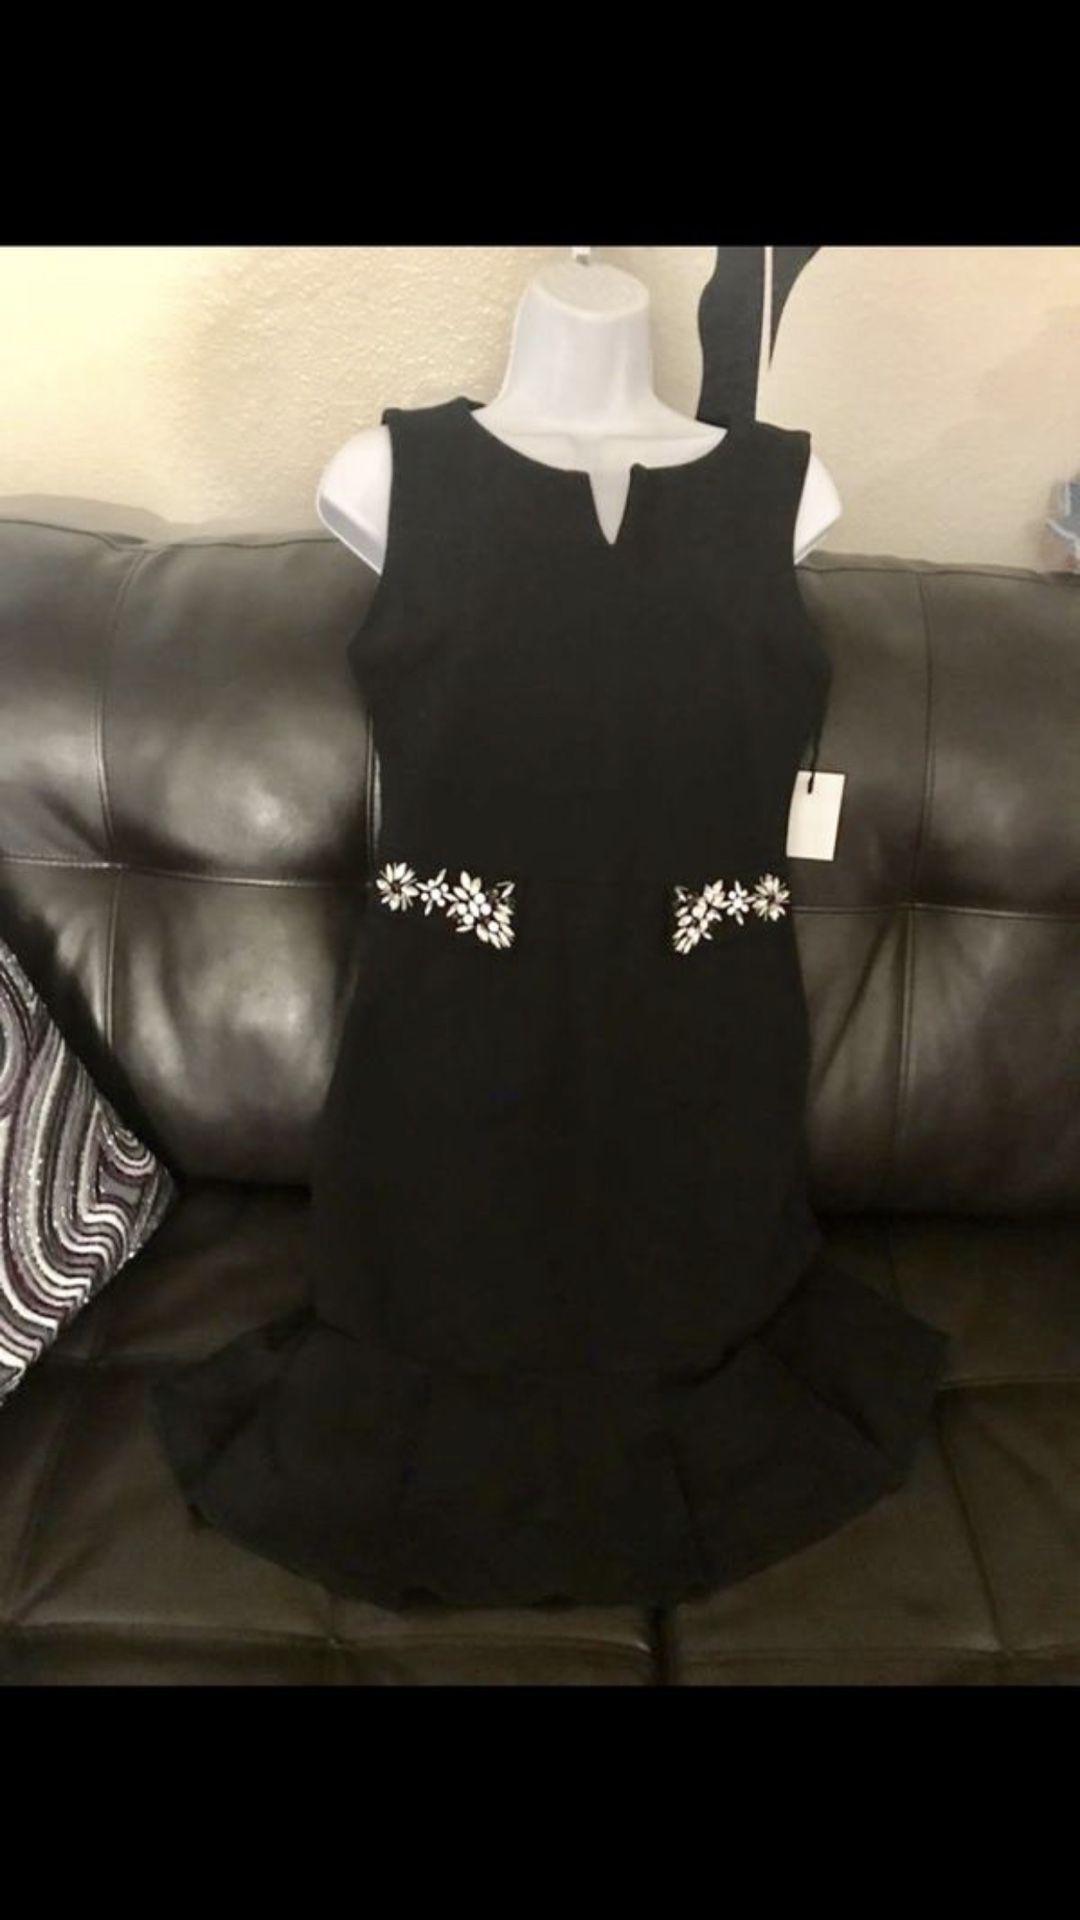 Seven & coco Black crystal dress. Small brand new